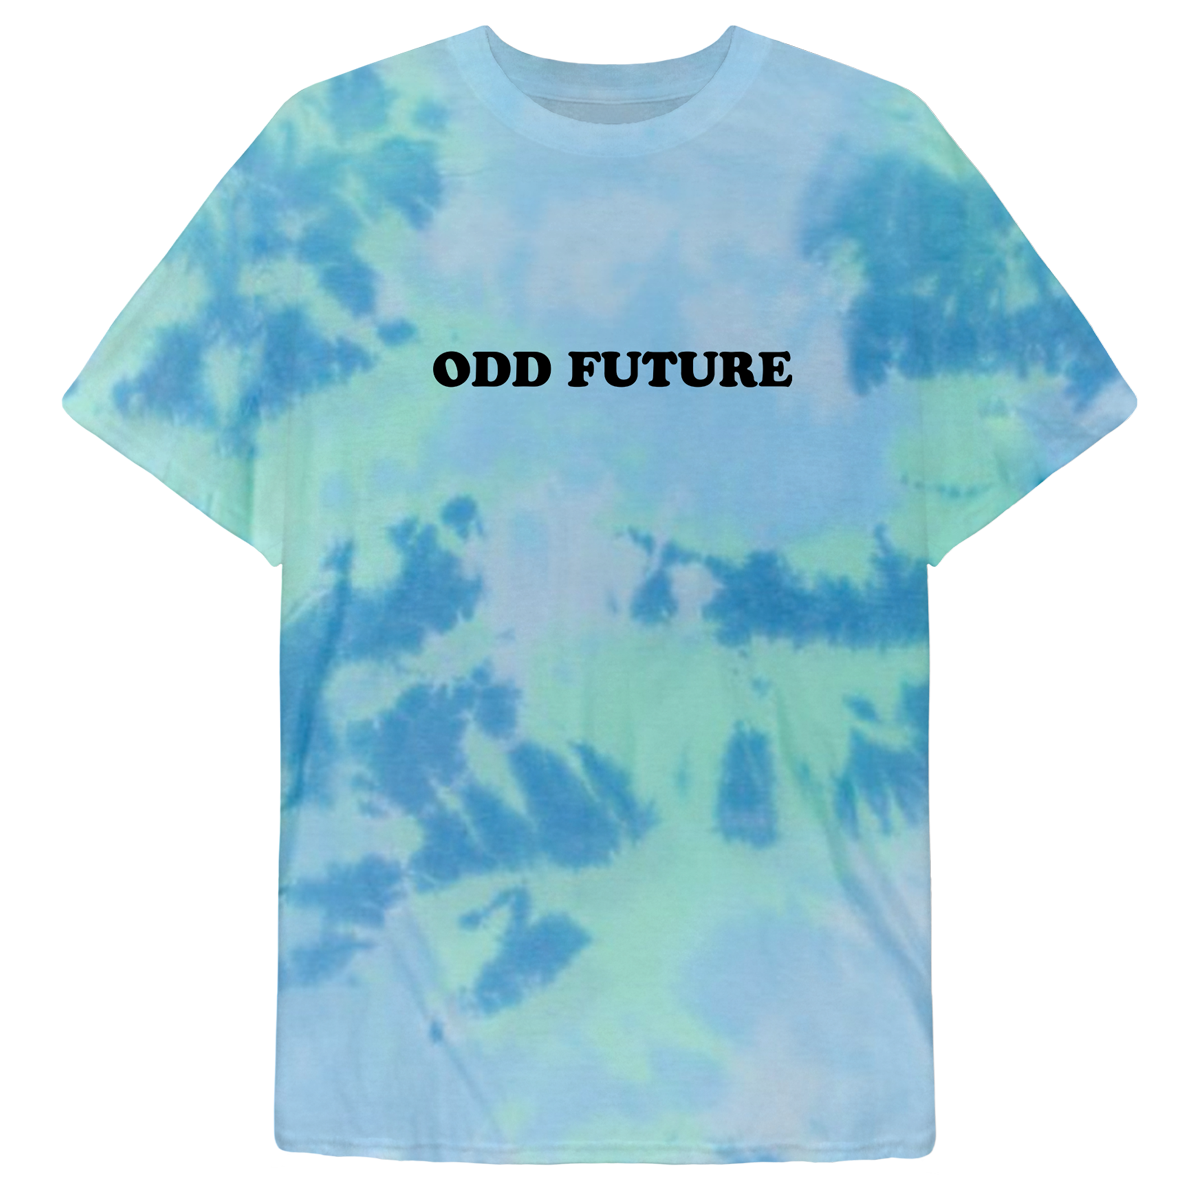 Odd Future Pyramid Scheme T-Shirt - Blue/Green Tie Dye